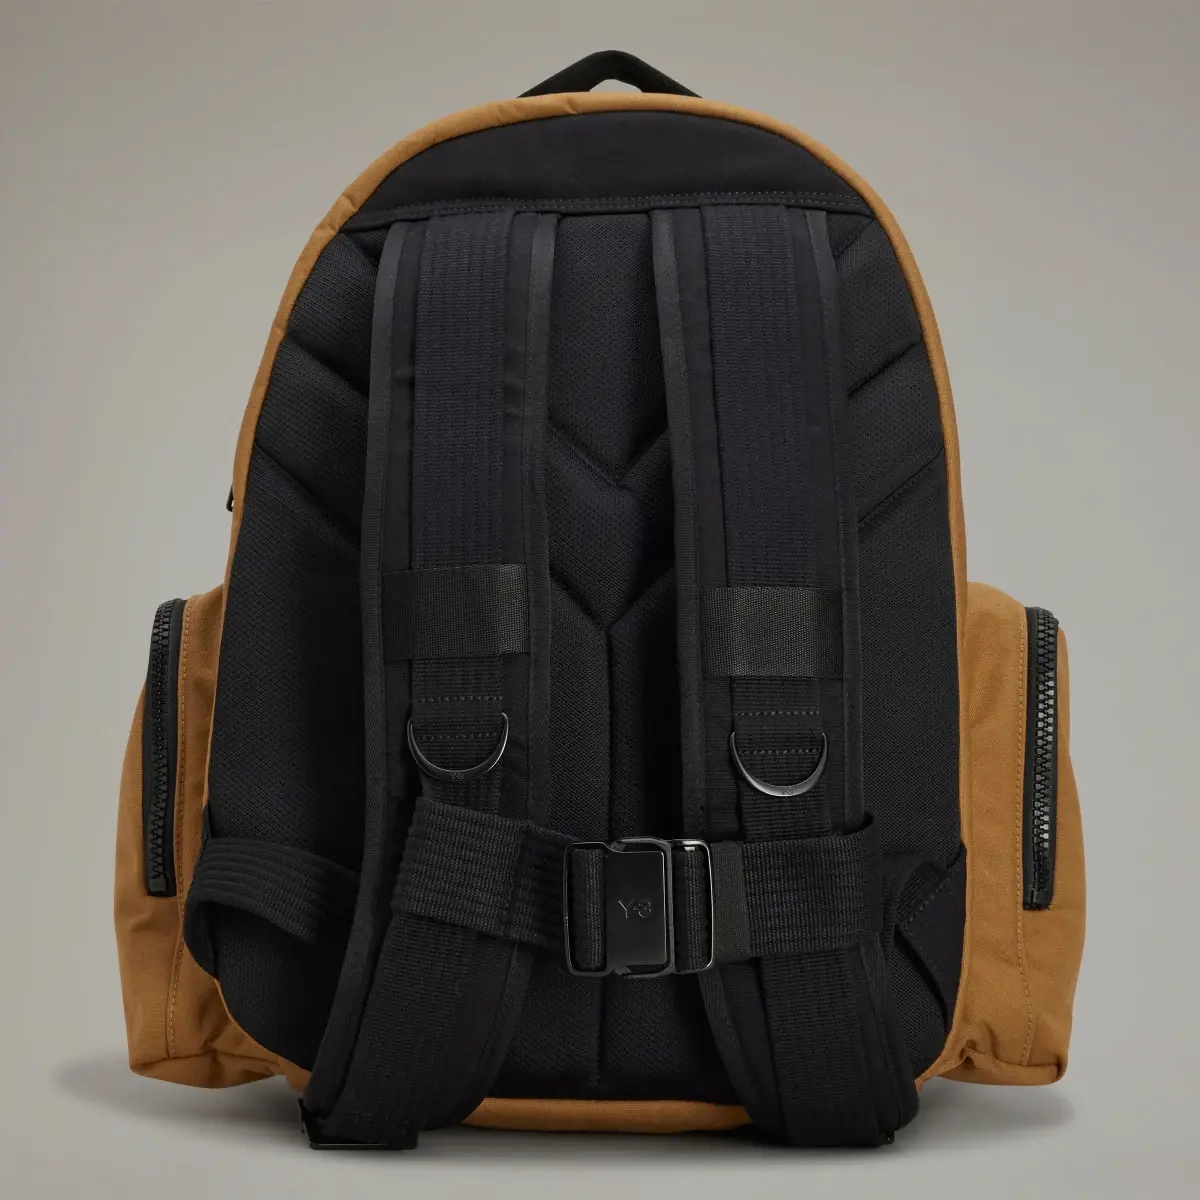 Adidas Y-3 Backpack. 3